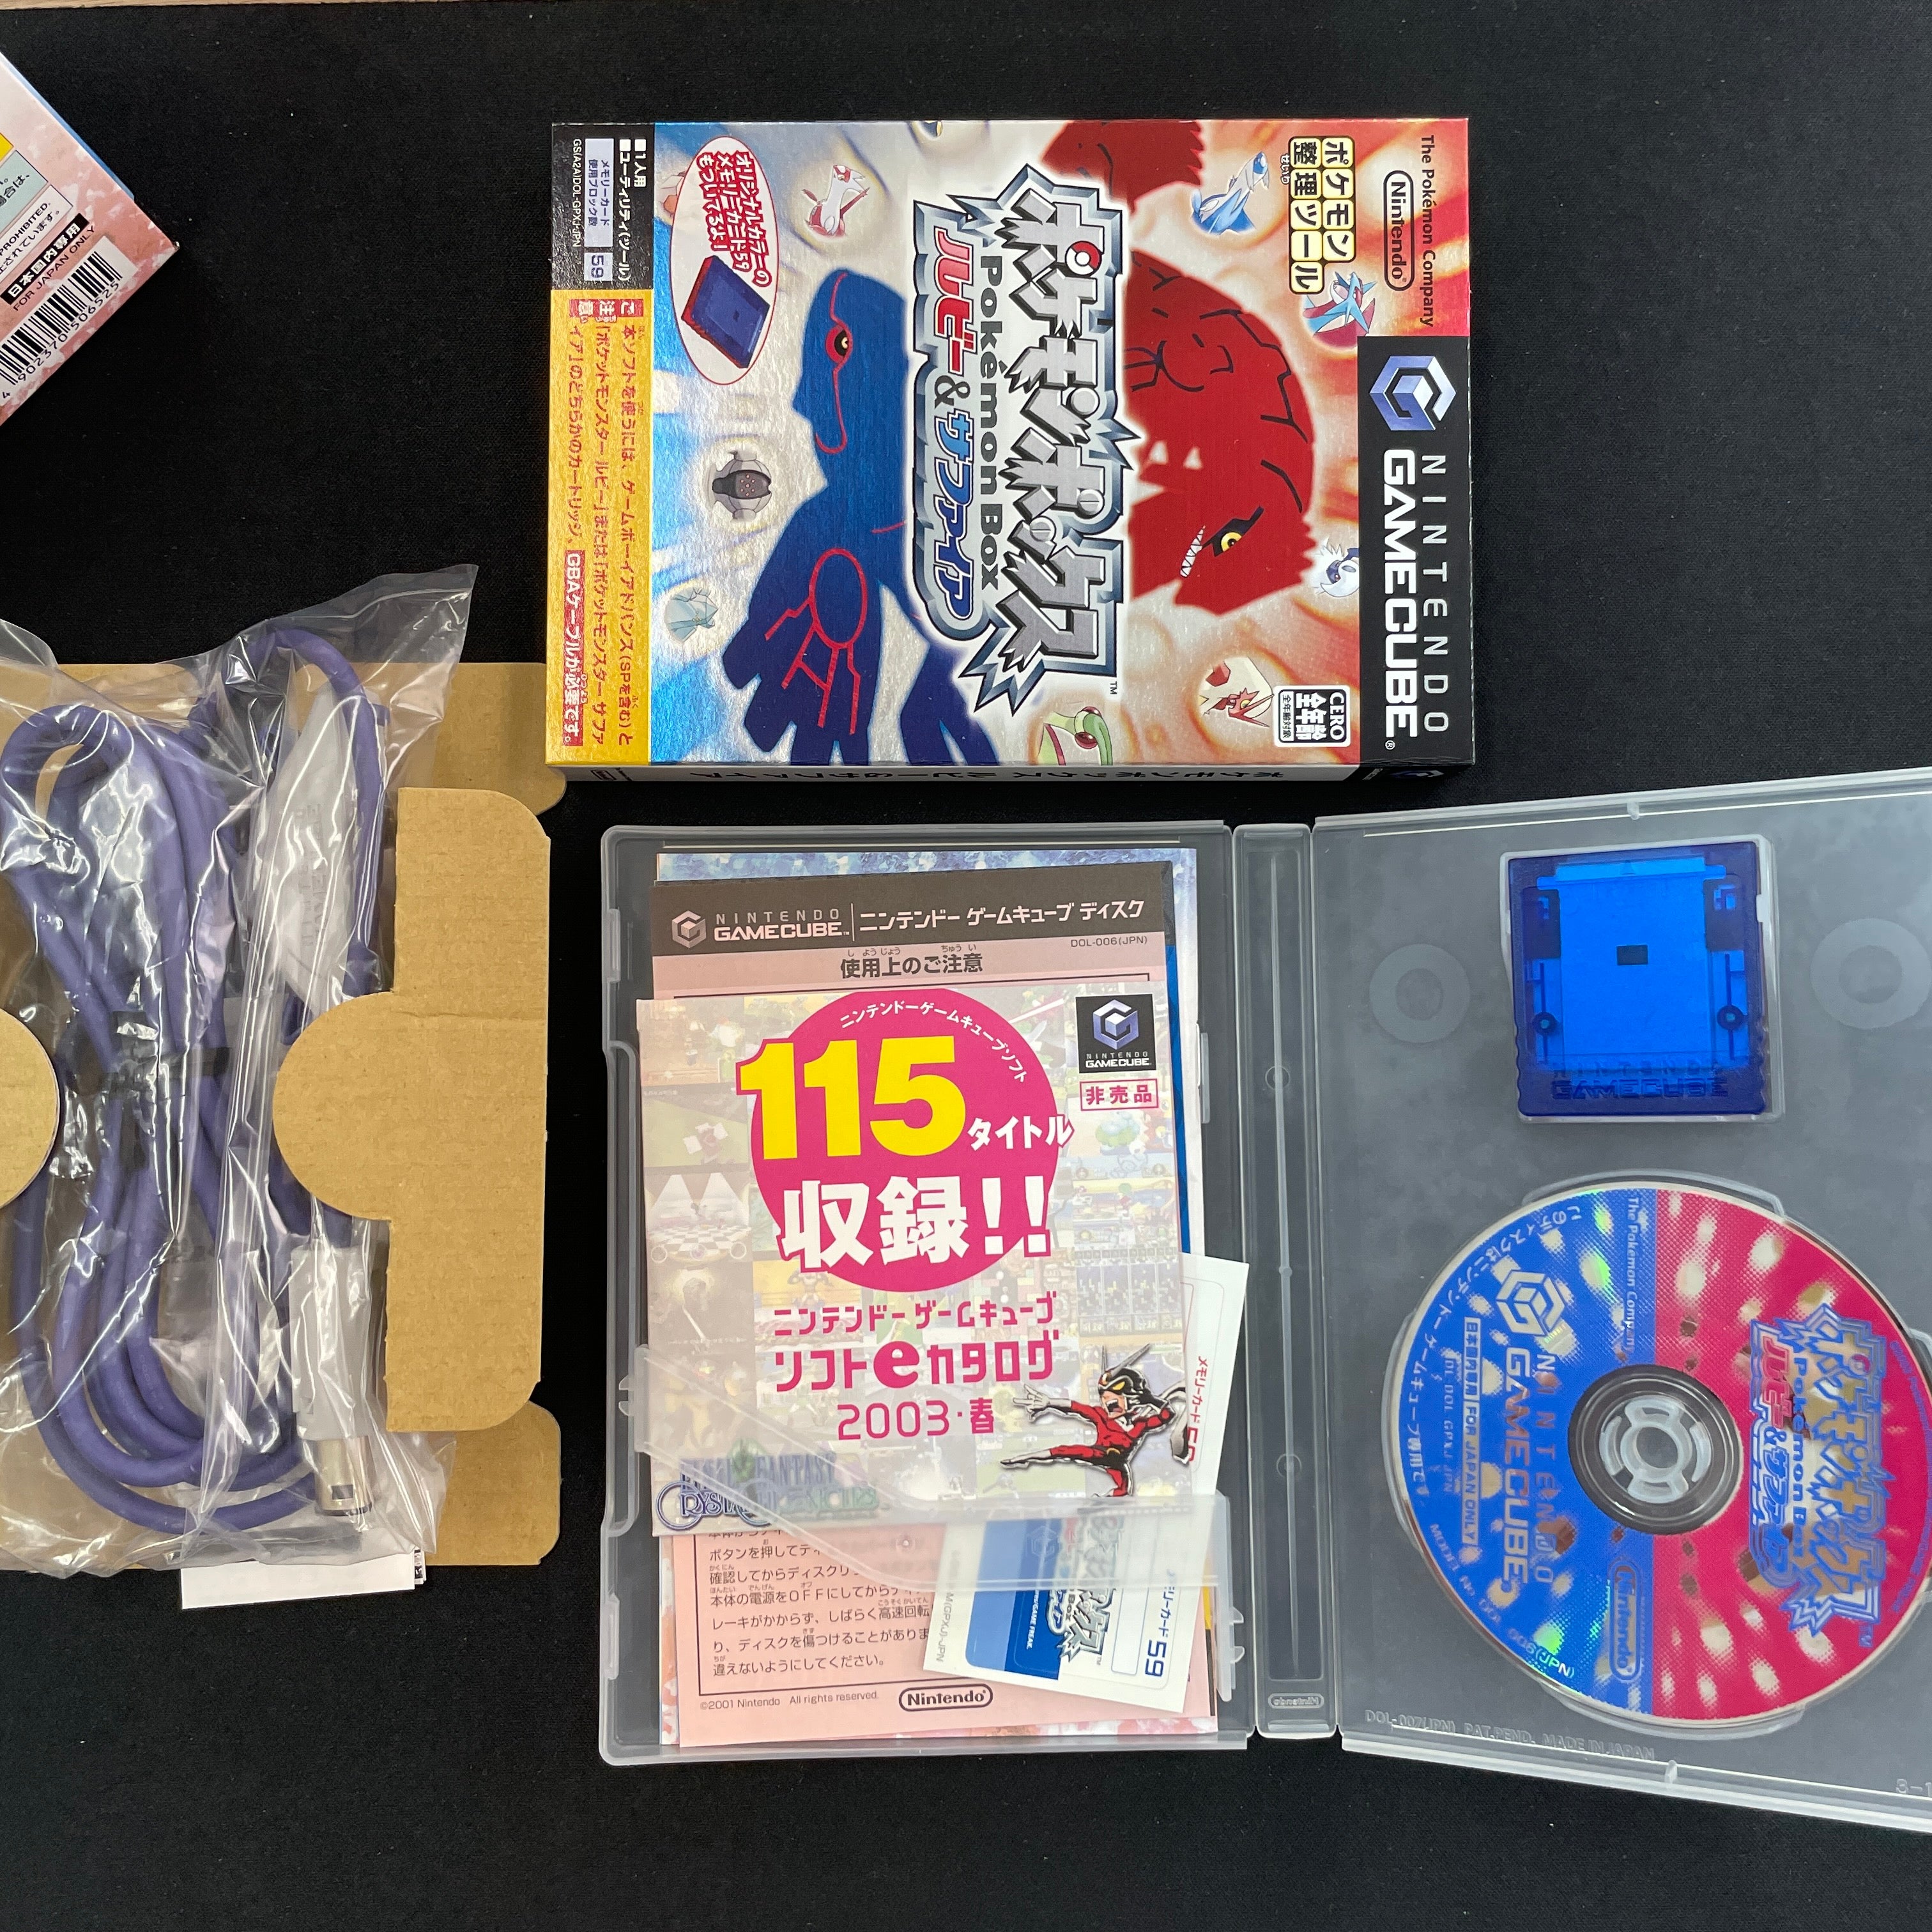 GAME CUBE - POKÉMON BOX - Ruby & Sapphire - Okai doku GBA cable pack